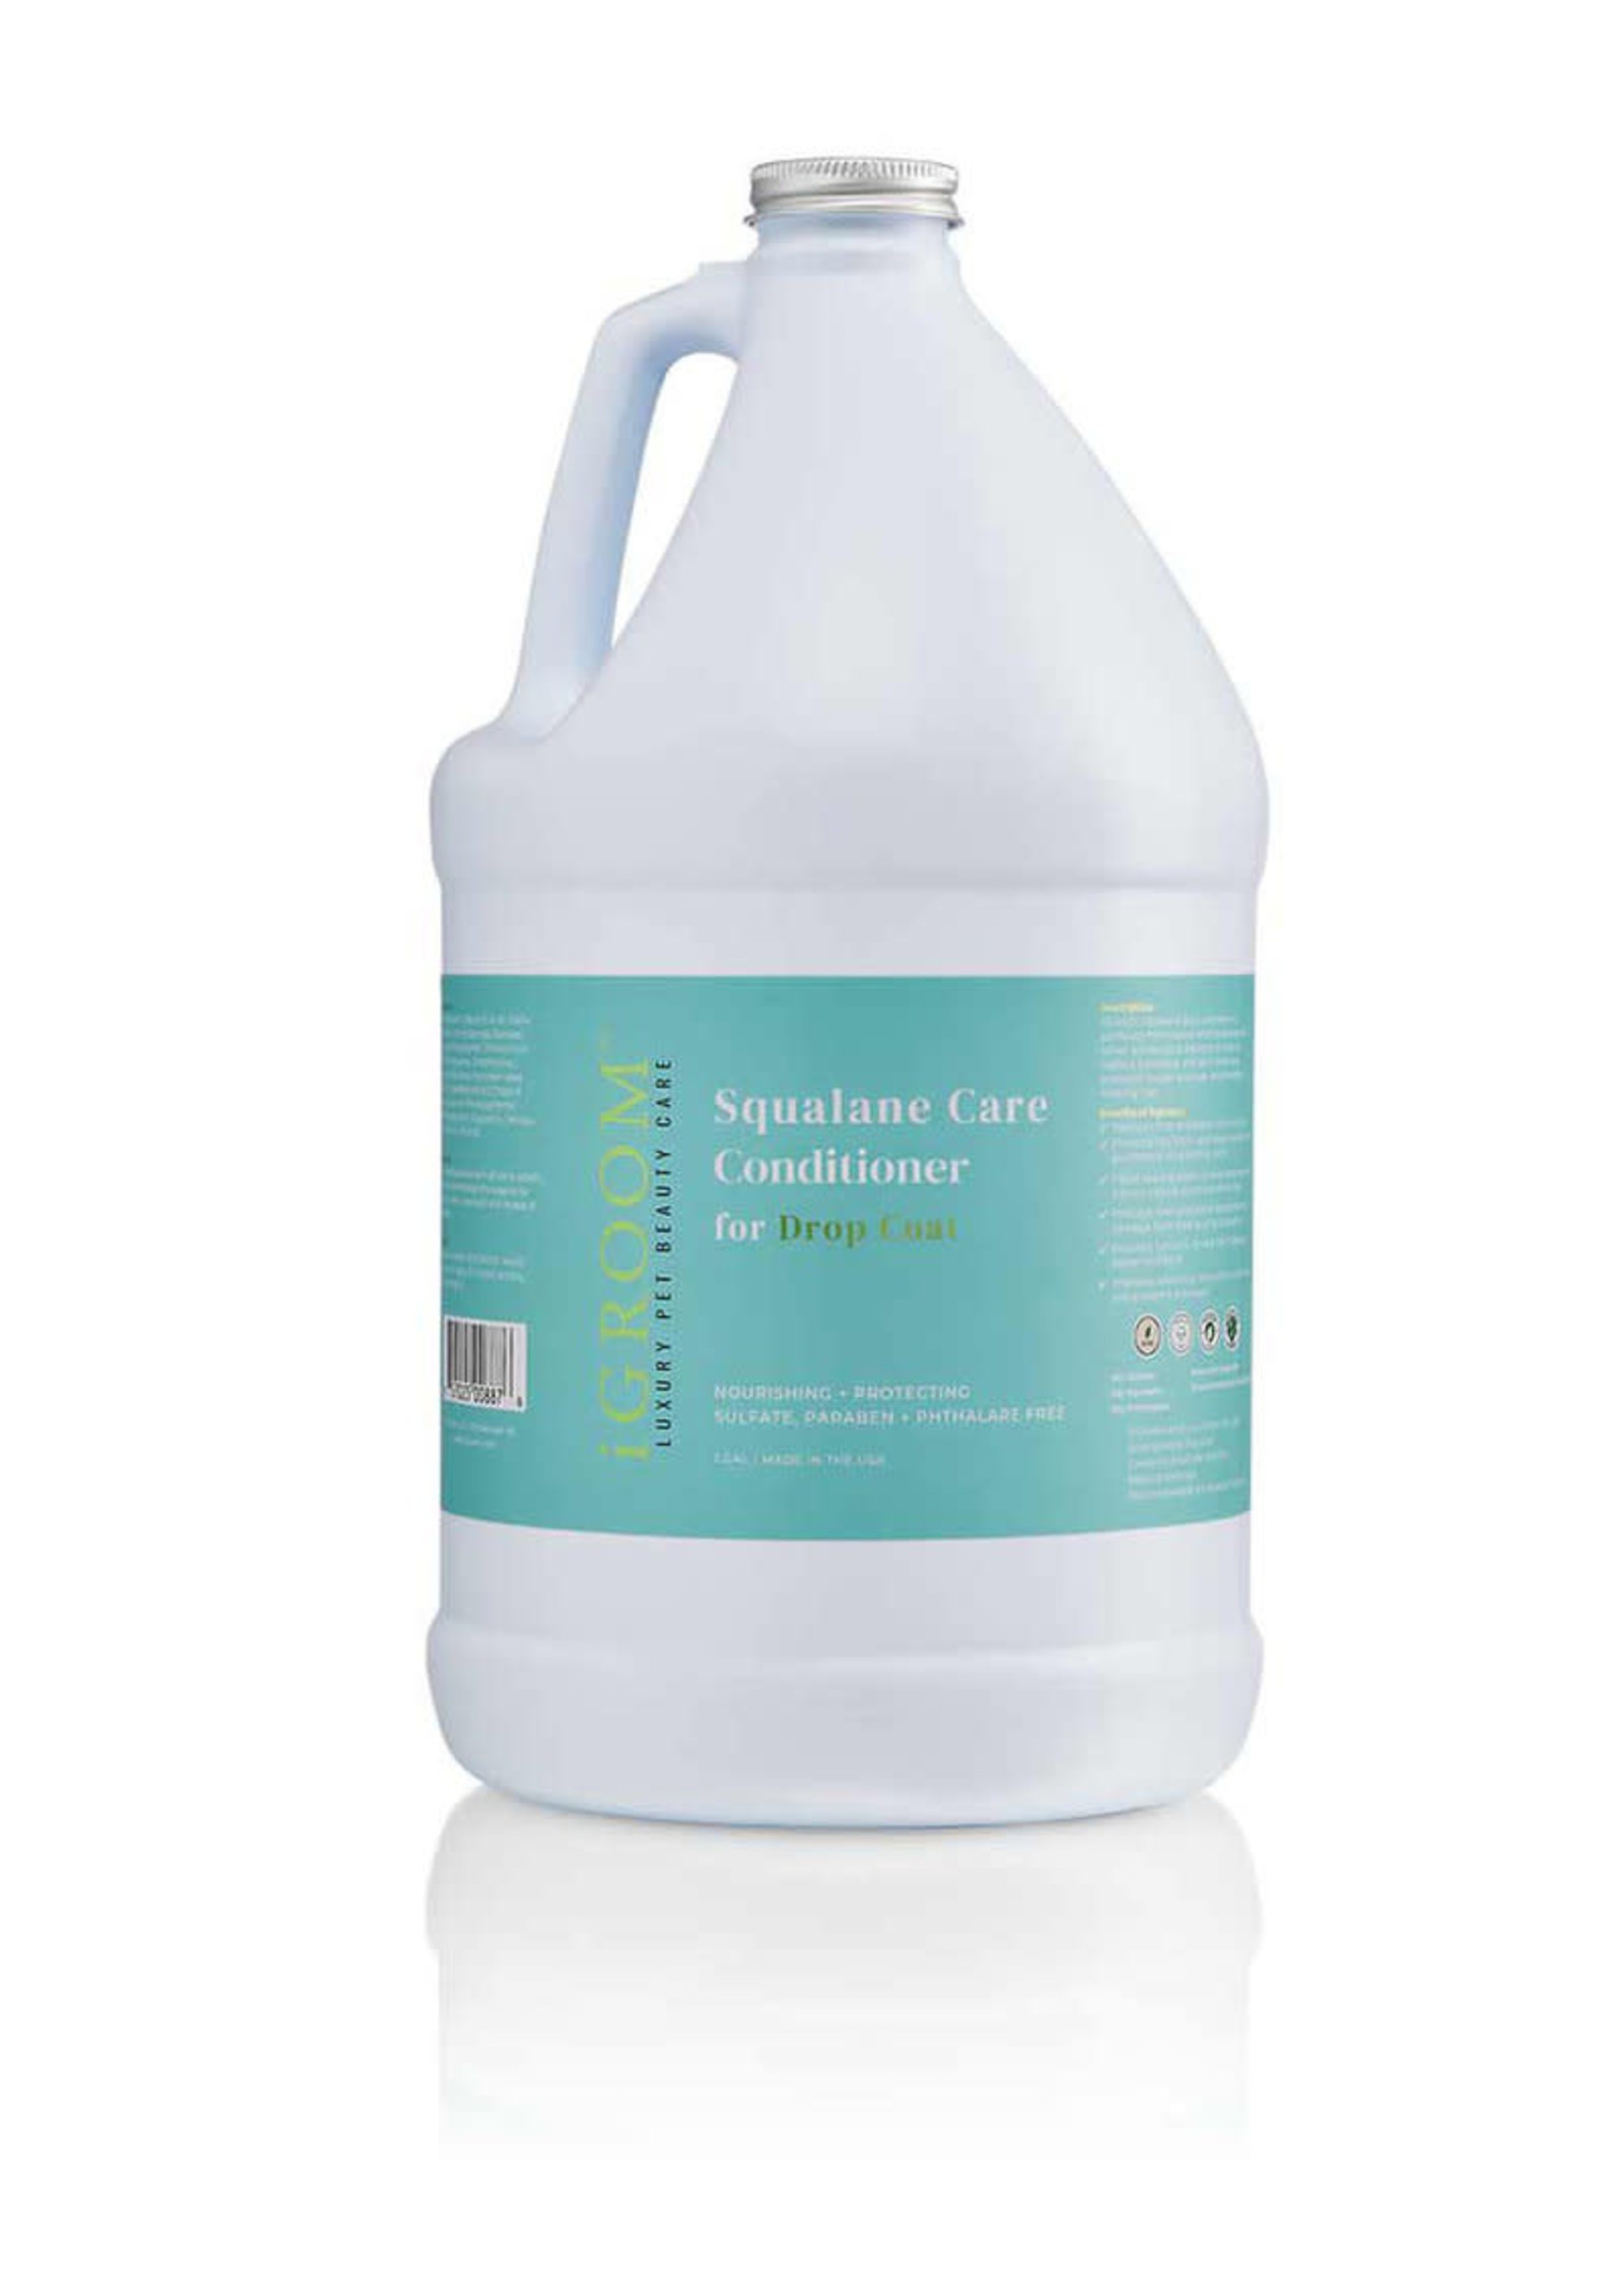 Igroom IGroom Squalane Care Conditioner (for dropcoat) Gallon